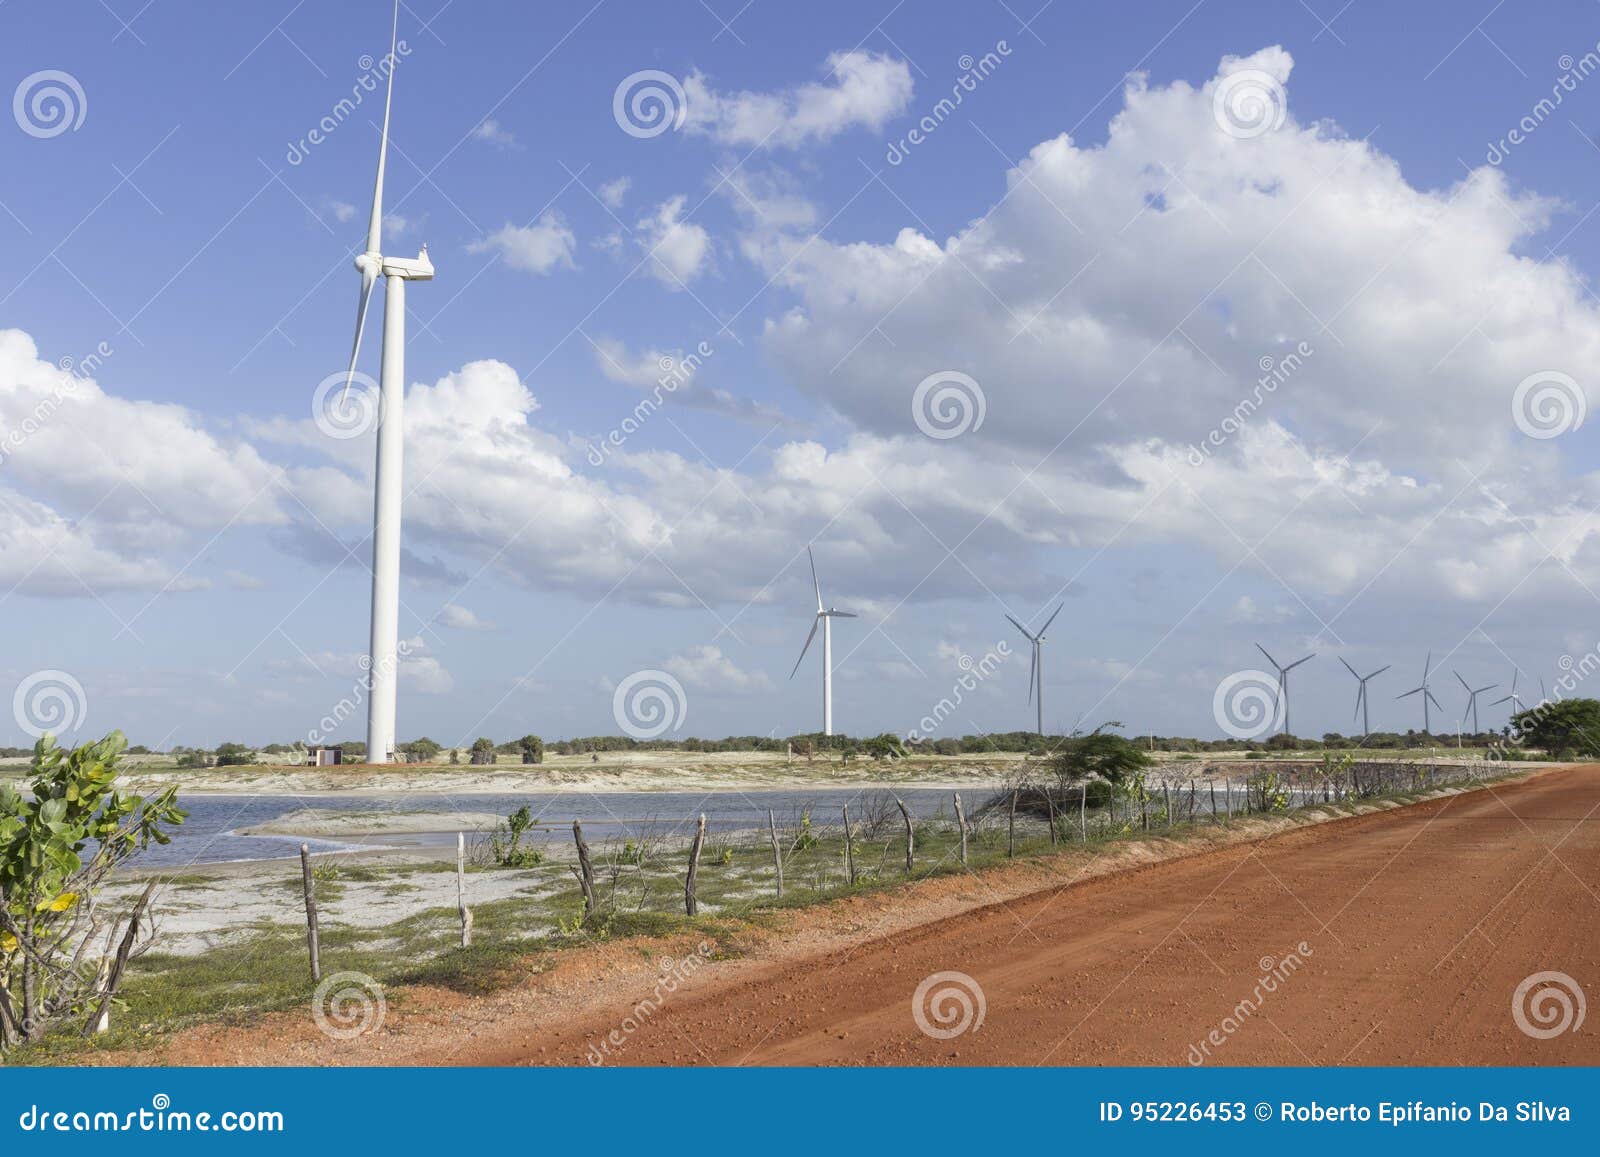 wind power in rio grande do norte, brazil